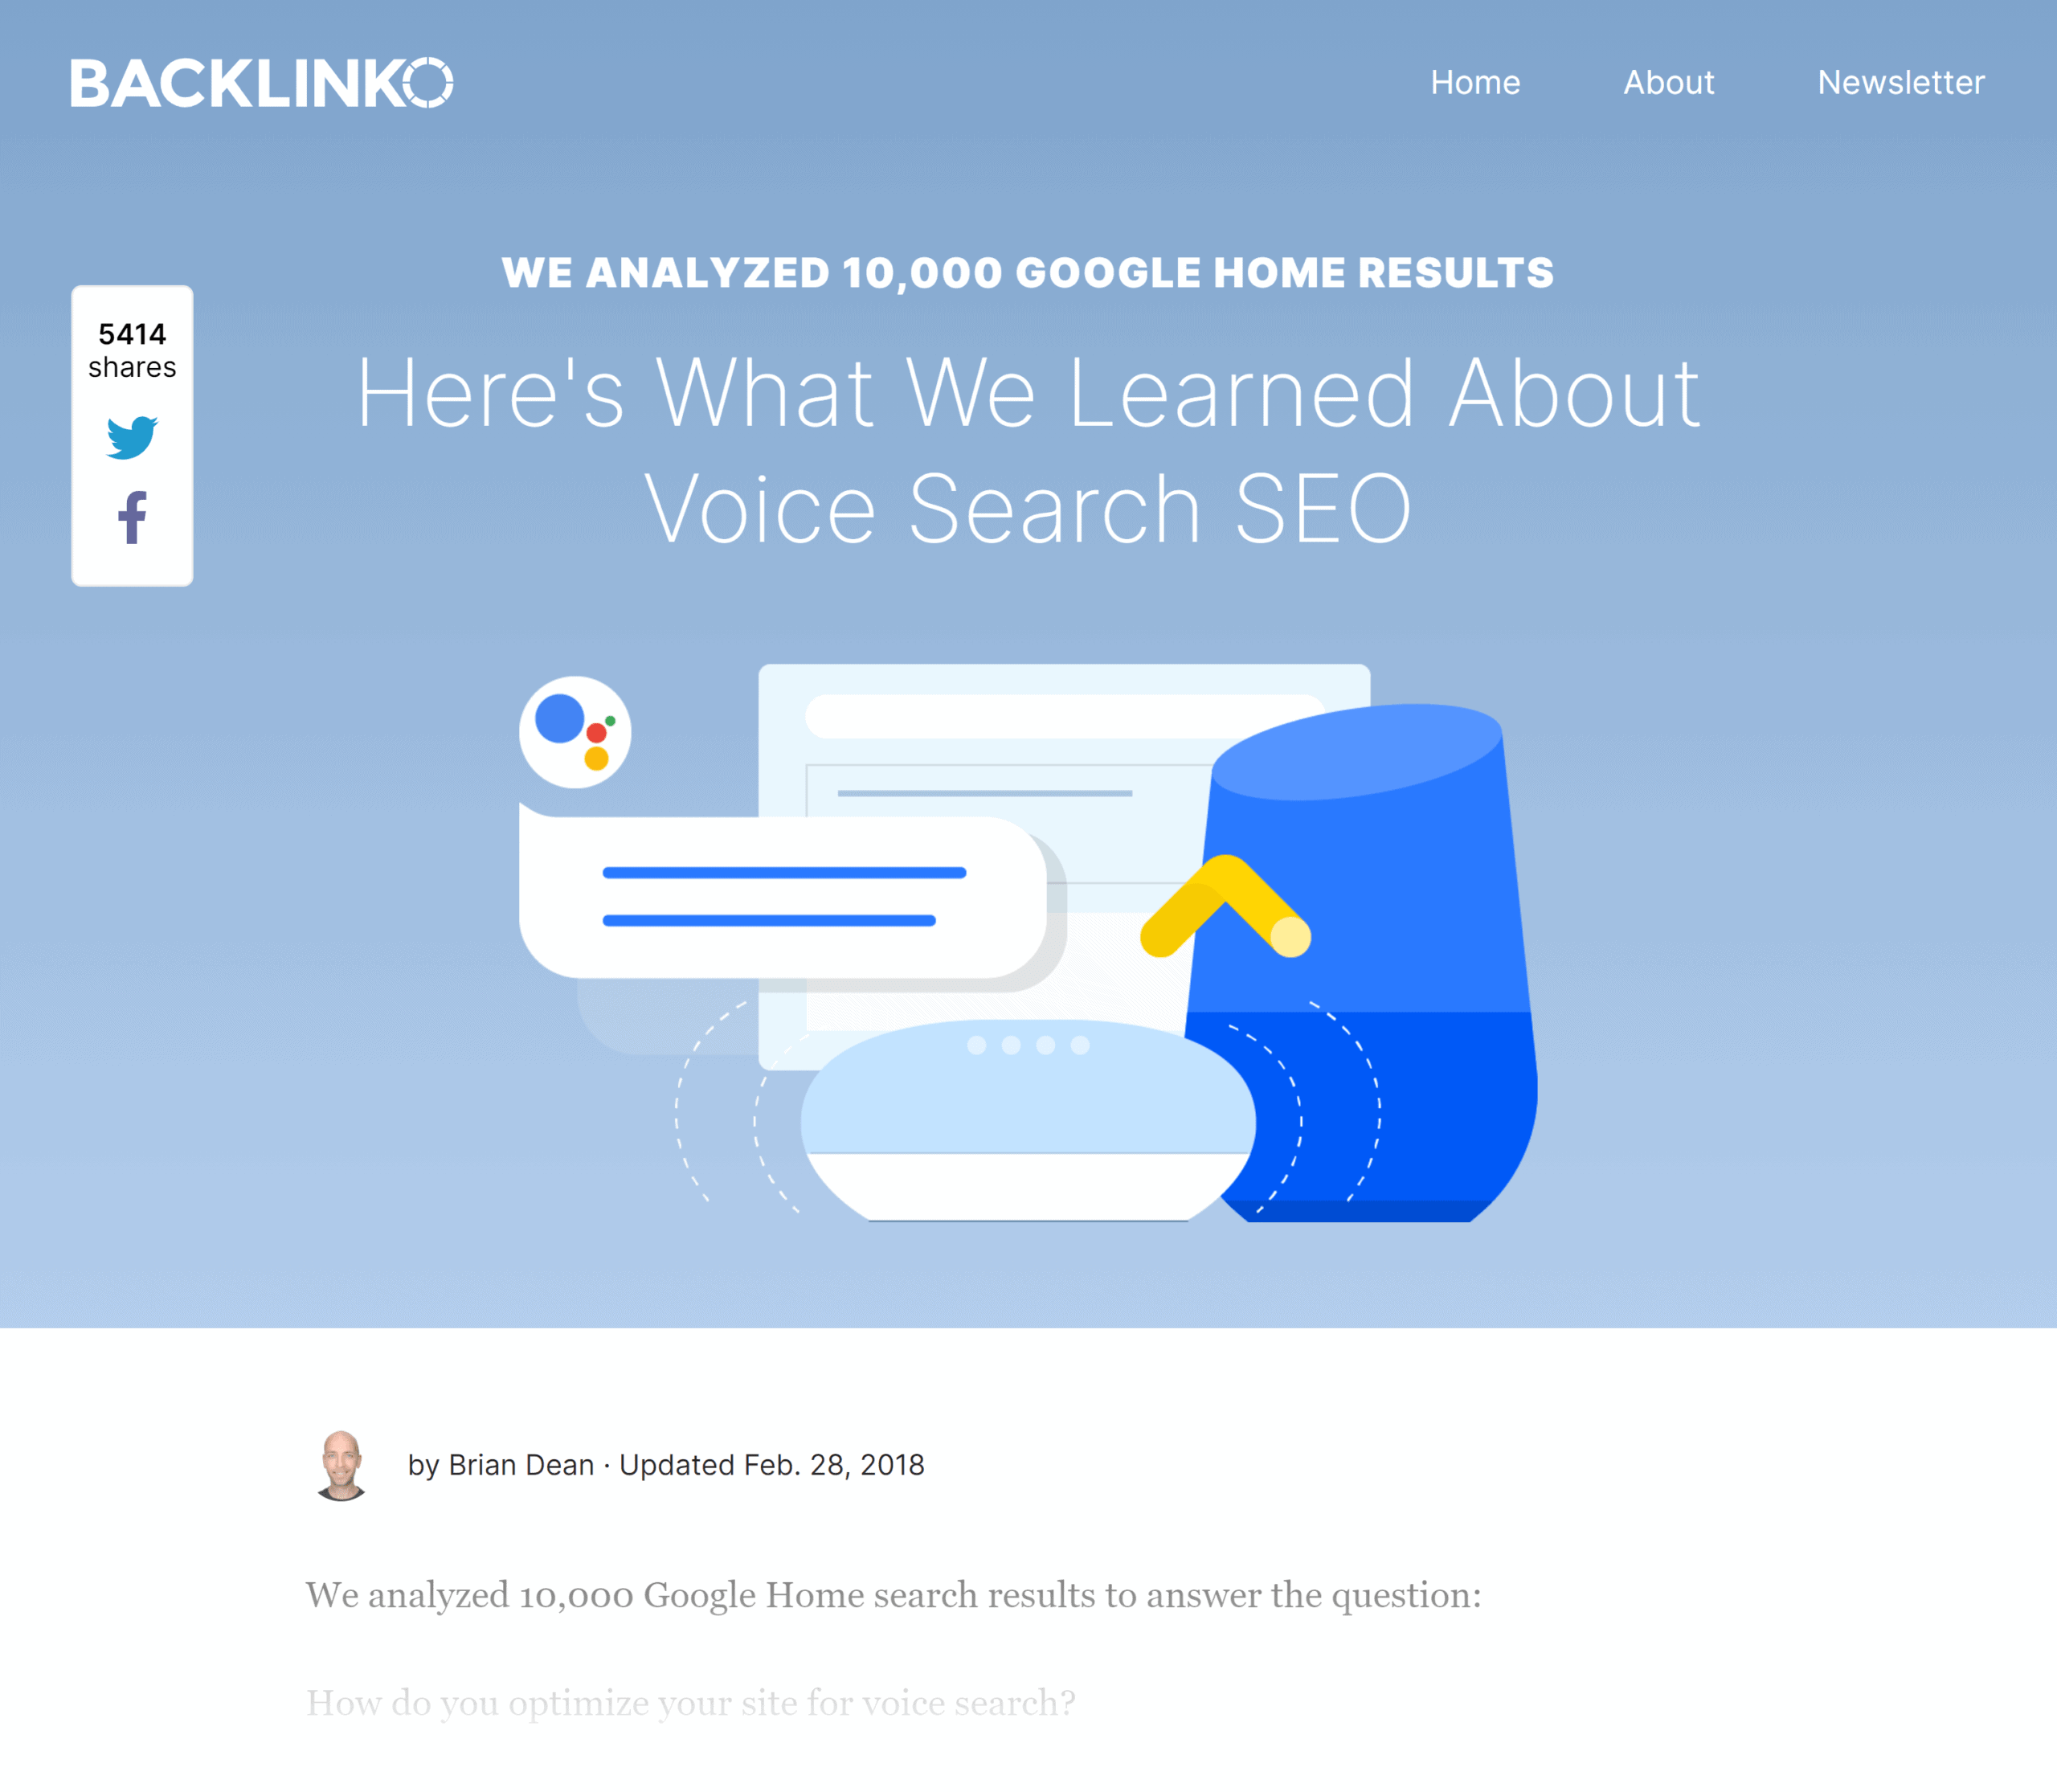 Backlinko – Voice search SEO study